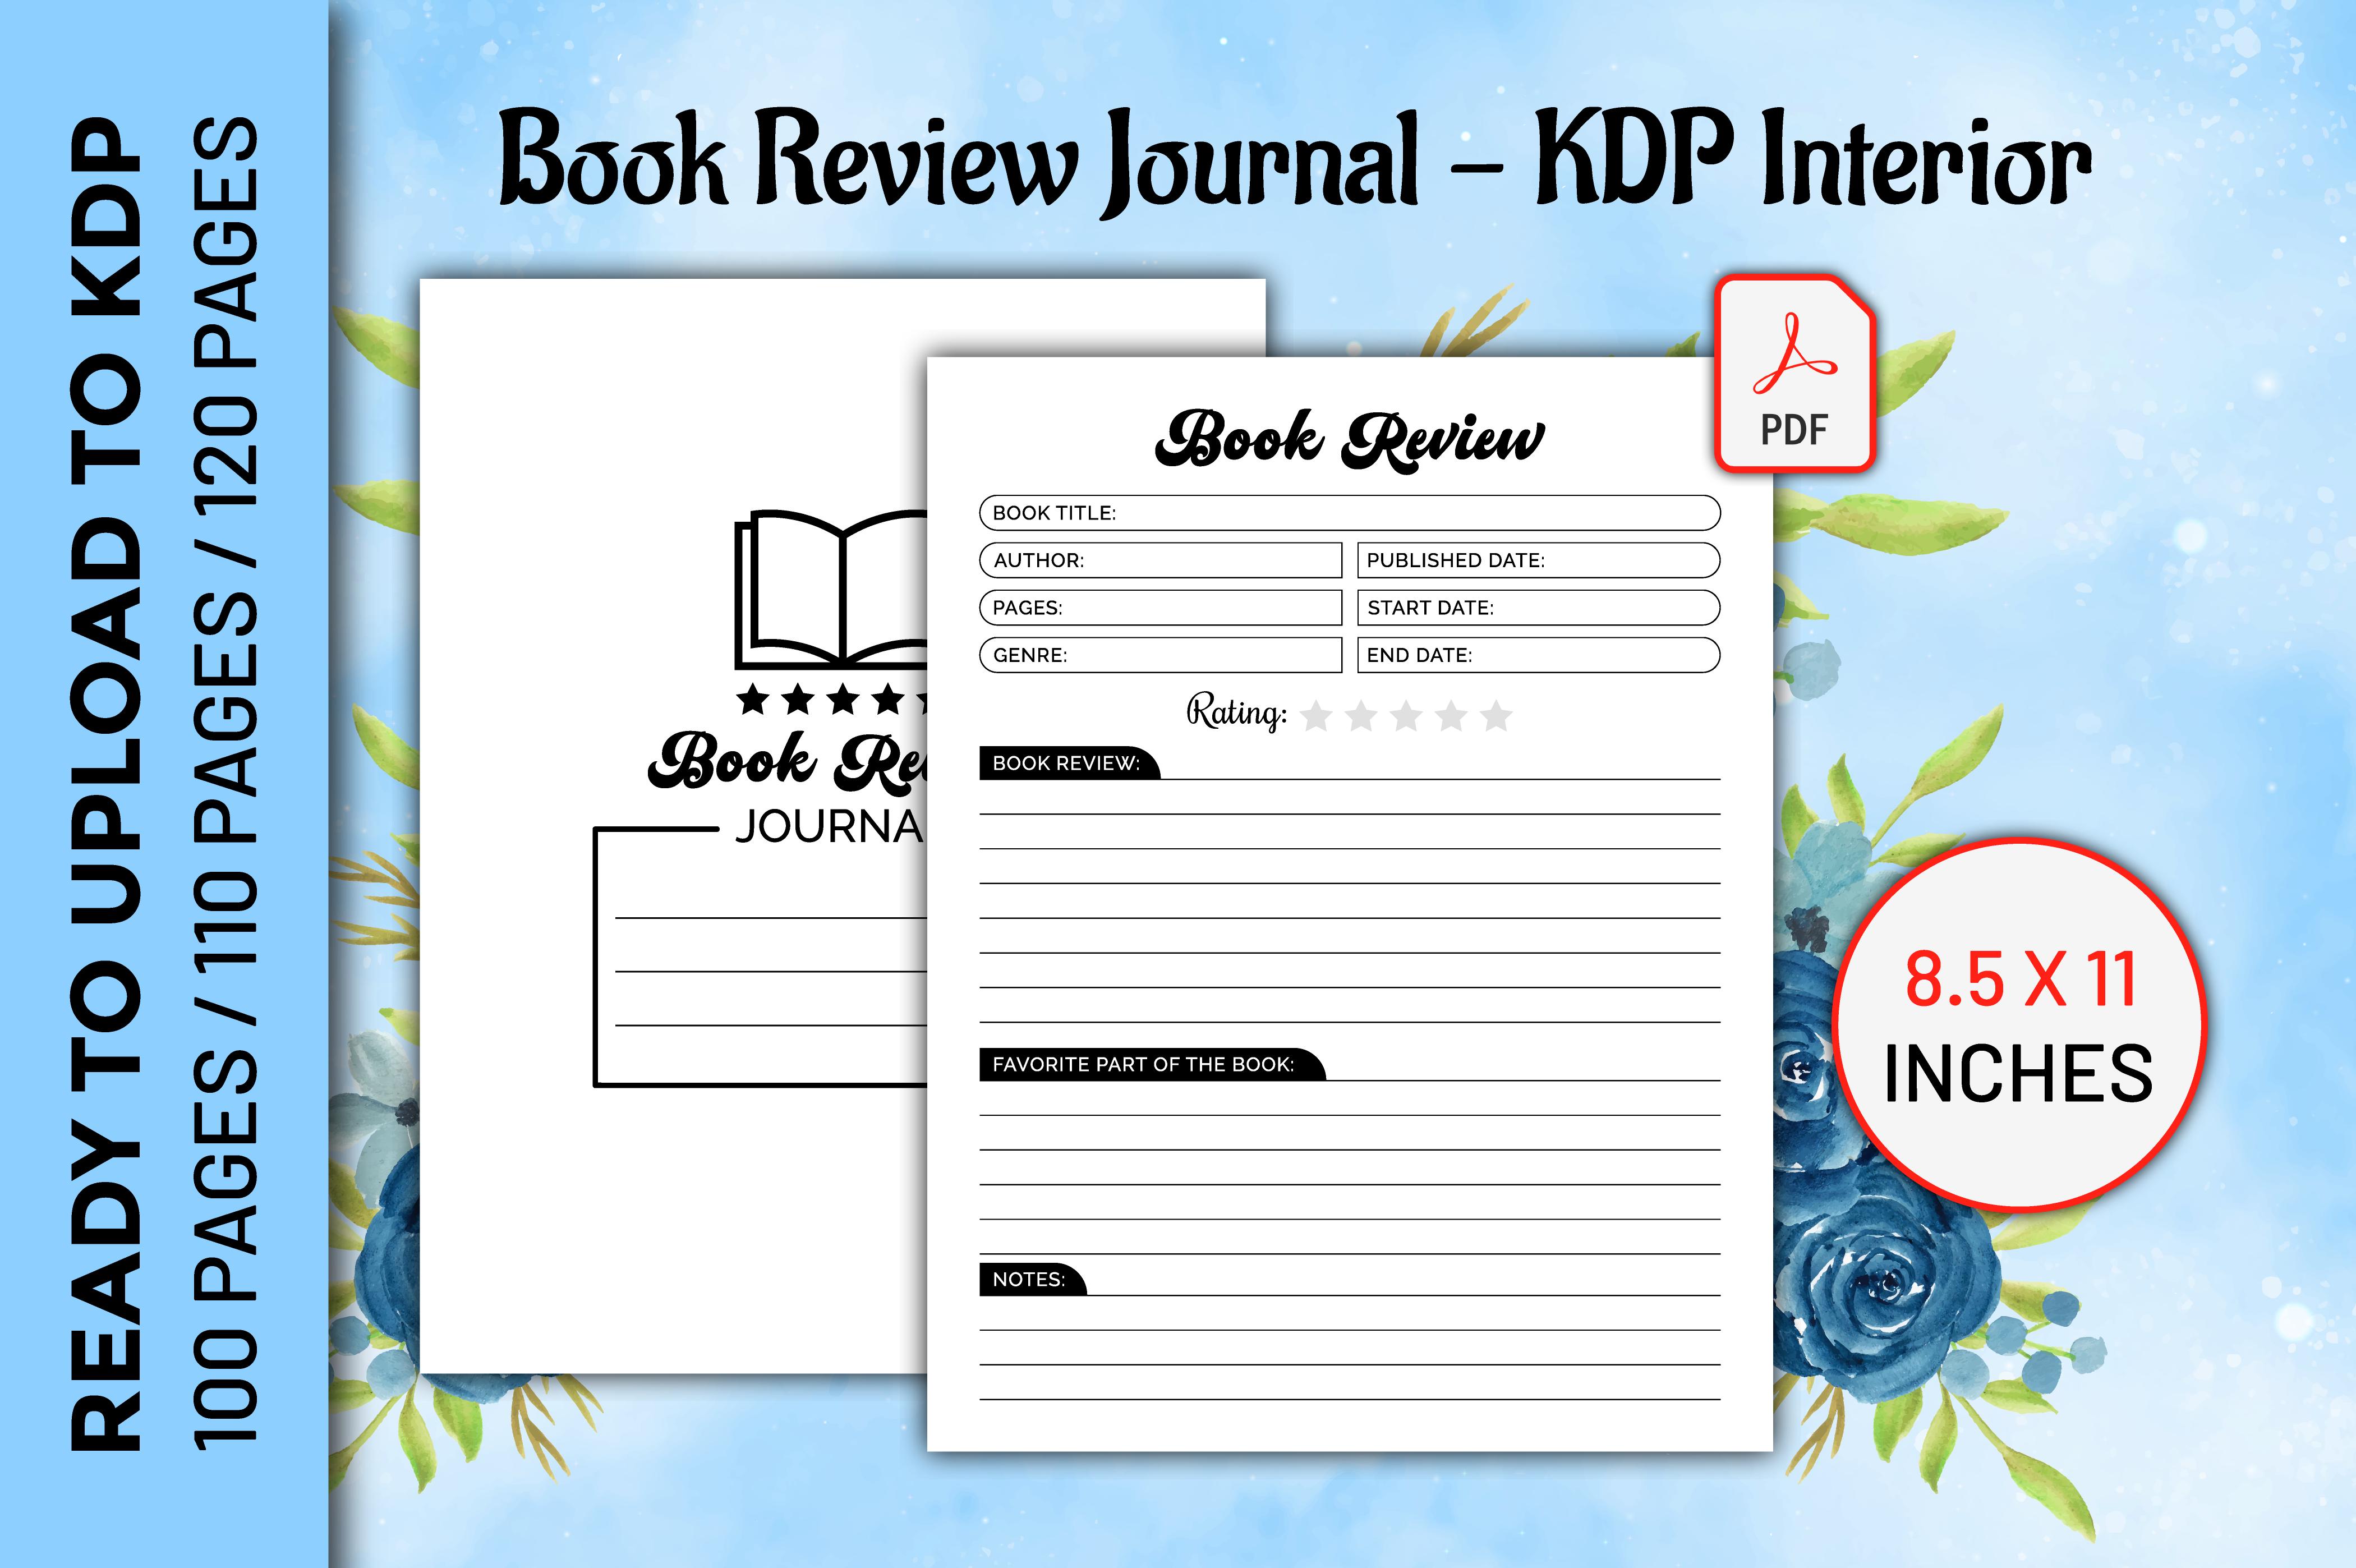 Book Review Journal - KDP Interior